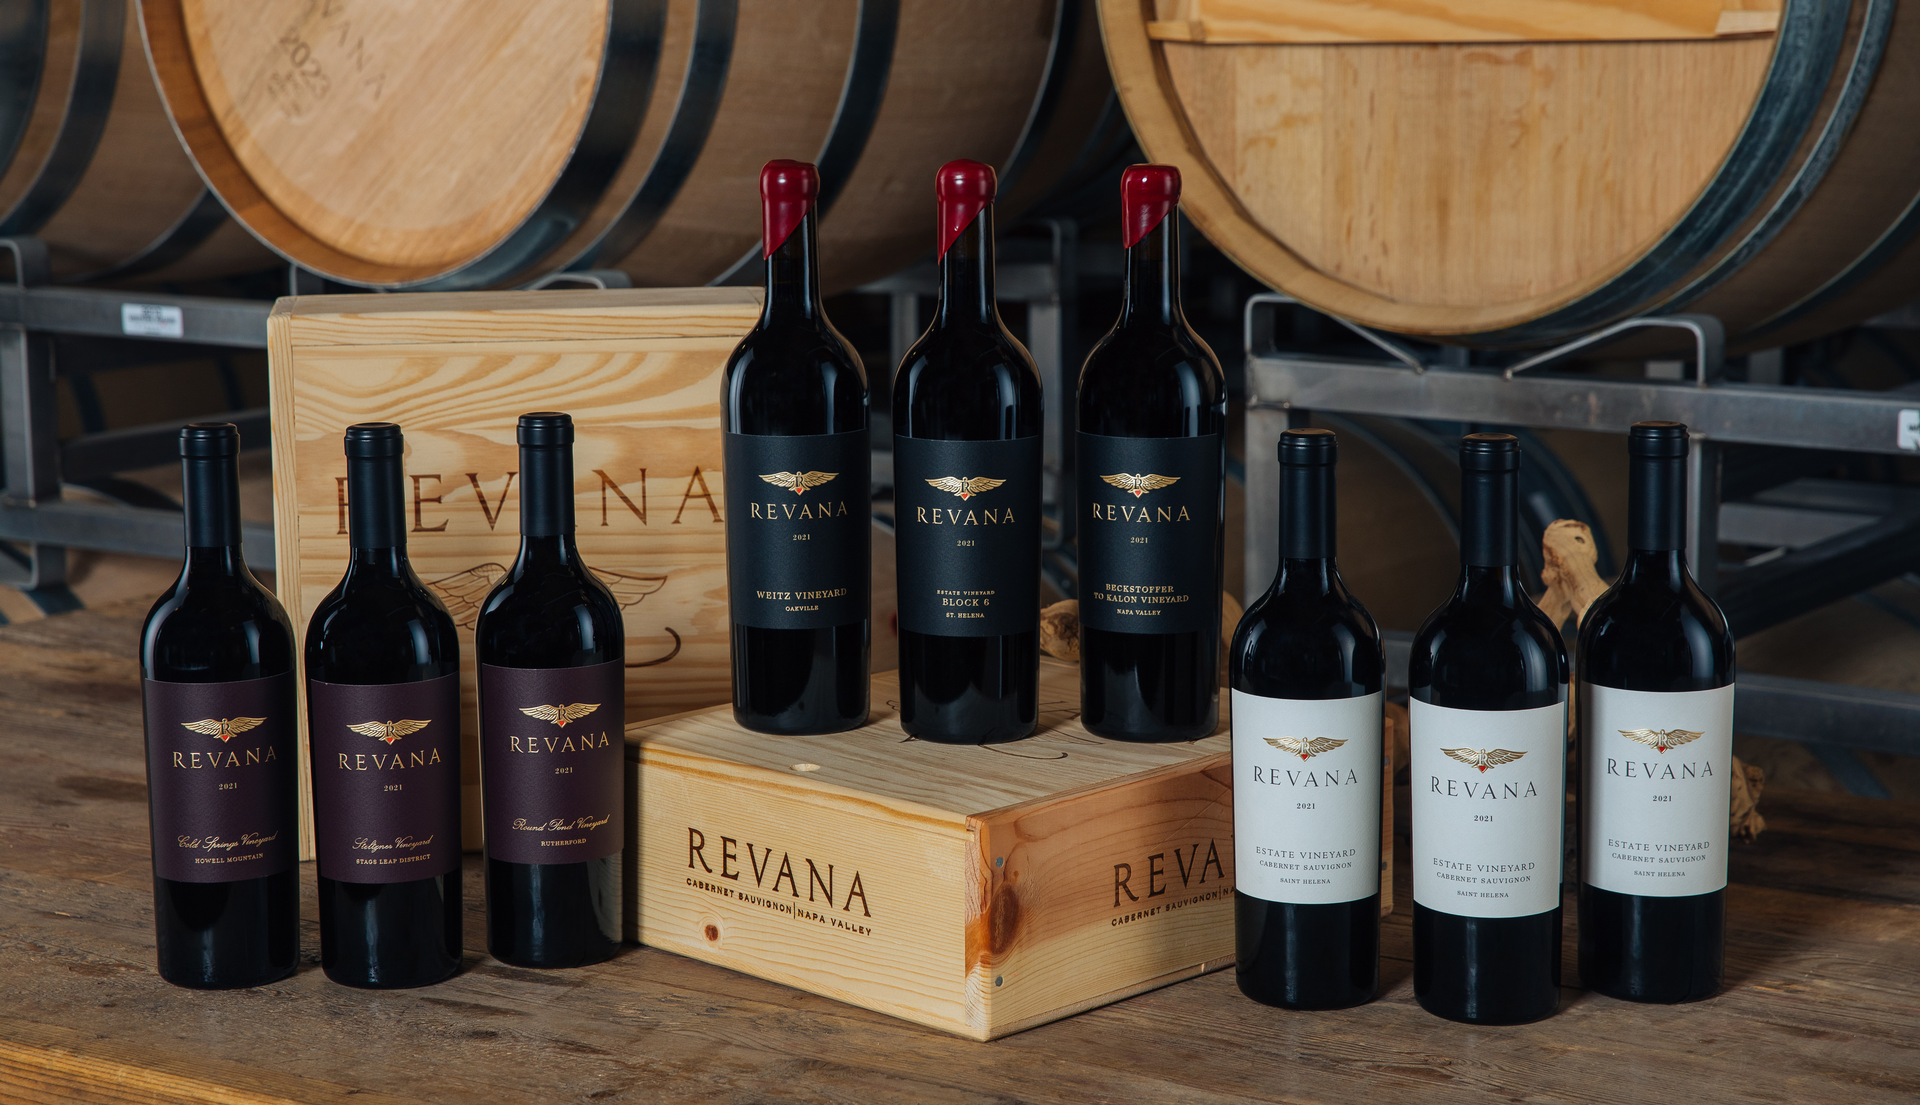 Revana Wine bottles in barrel room